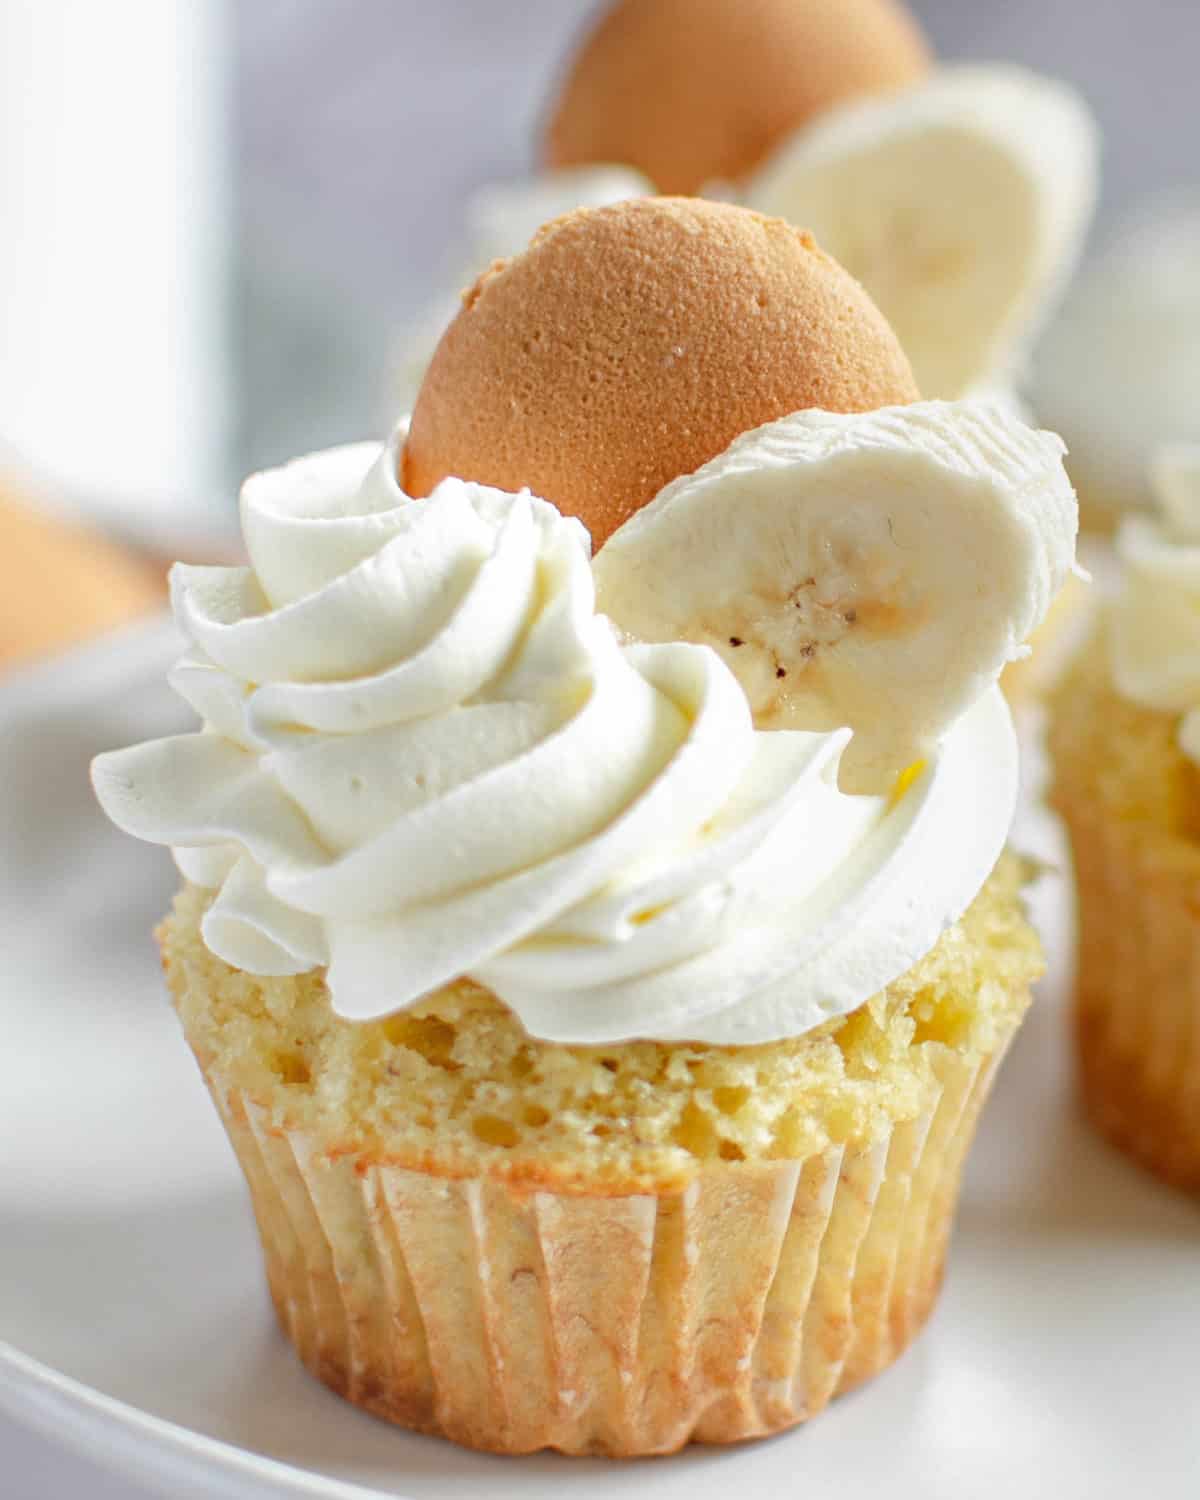 A banana cream cupcake up close.